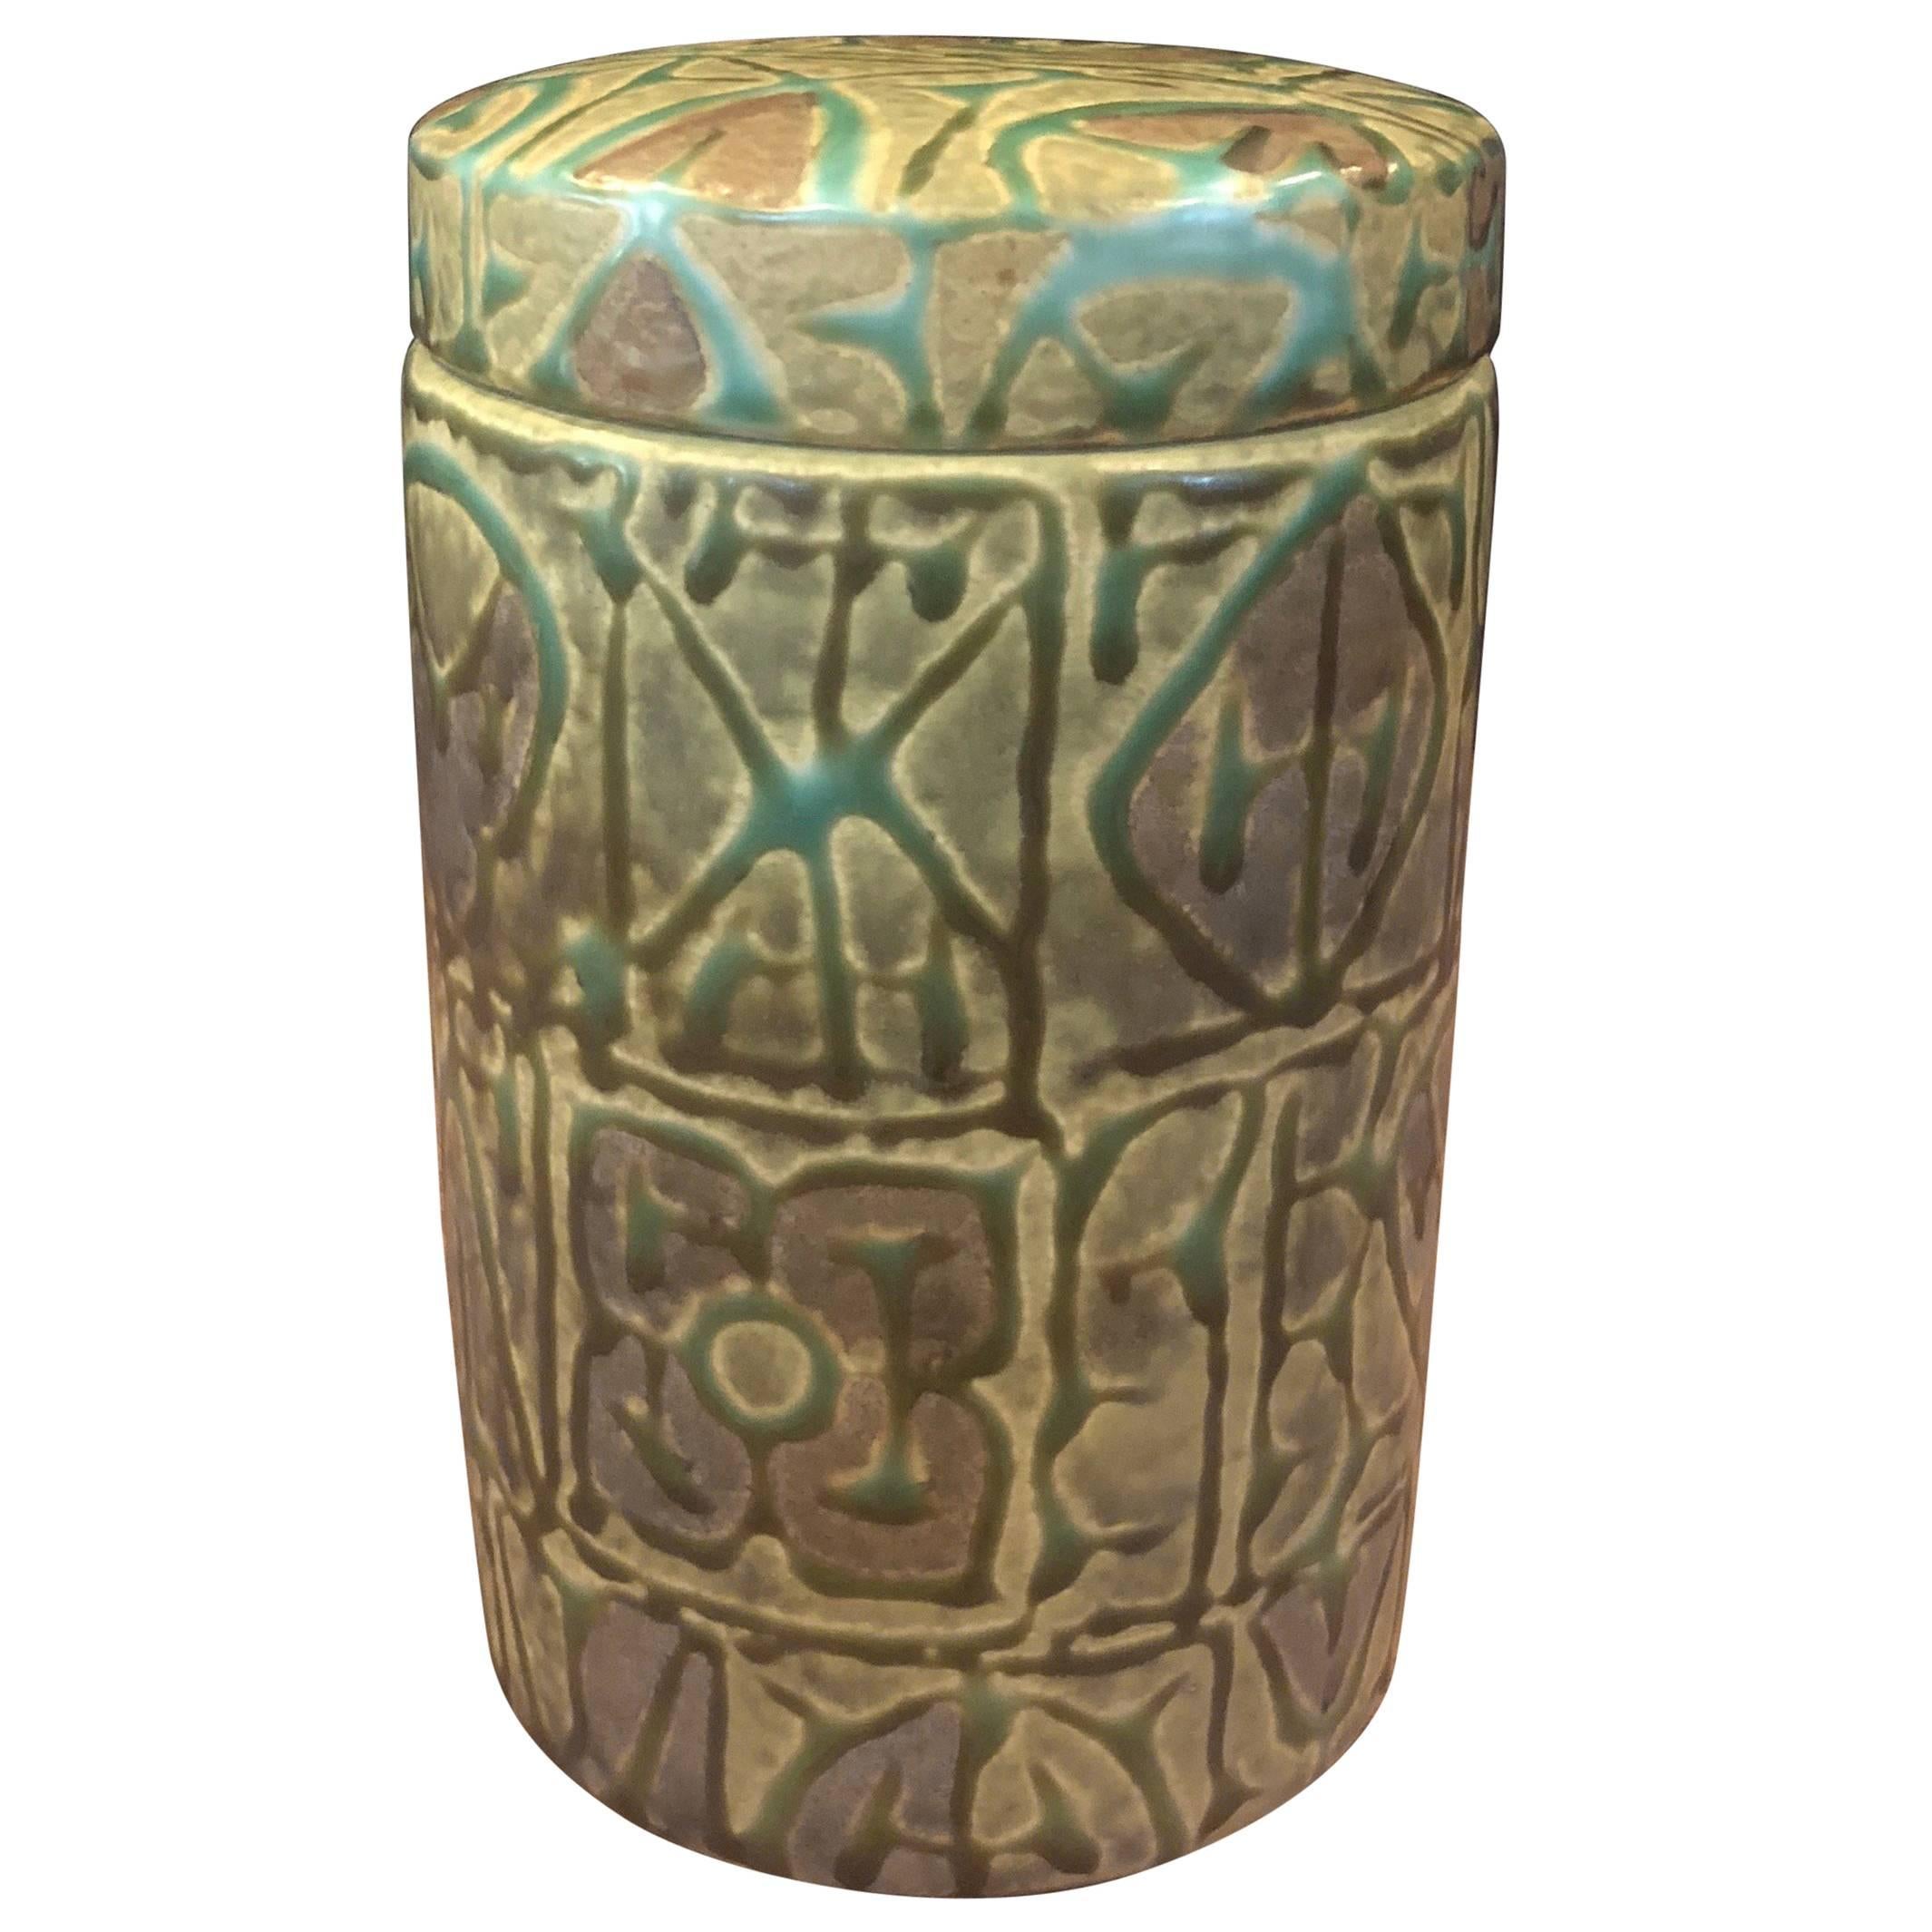 Fajance Ceramic Lidded Jar / Humidor by Nils Thorsson for Royal Copenhagen